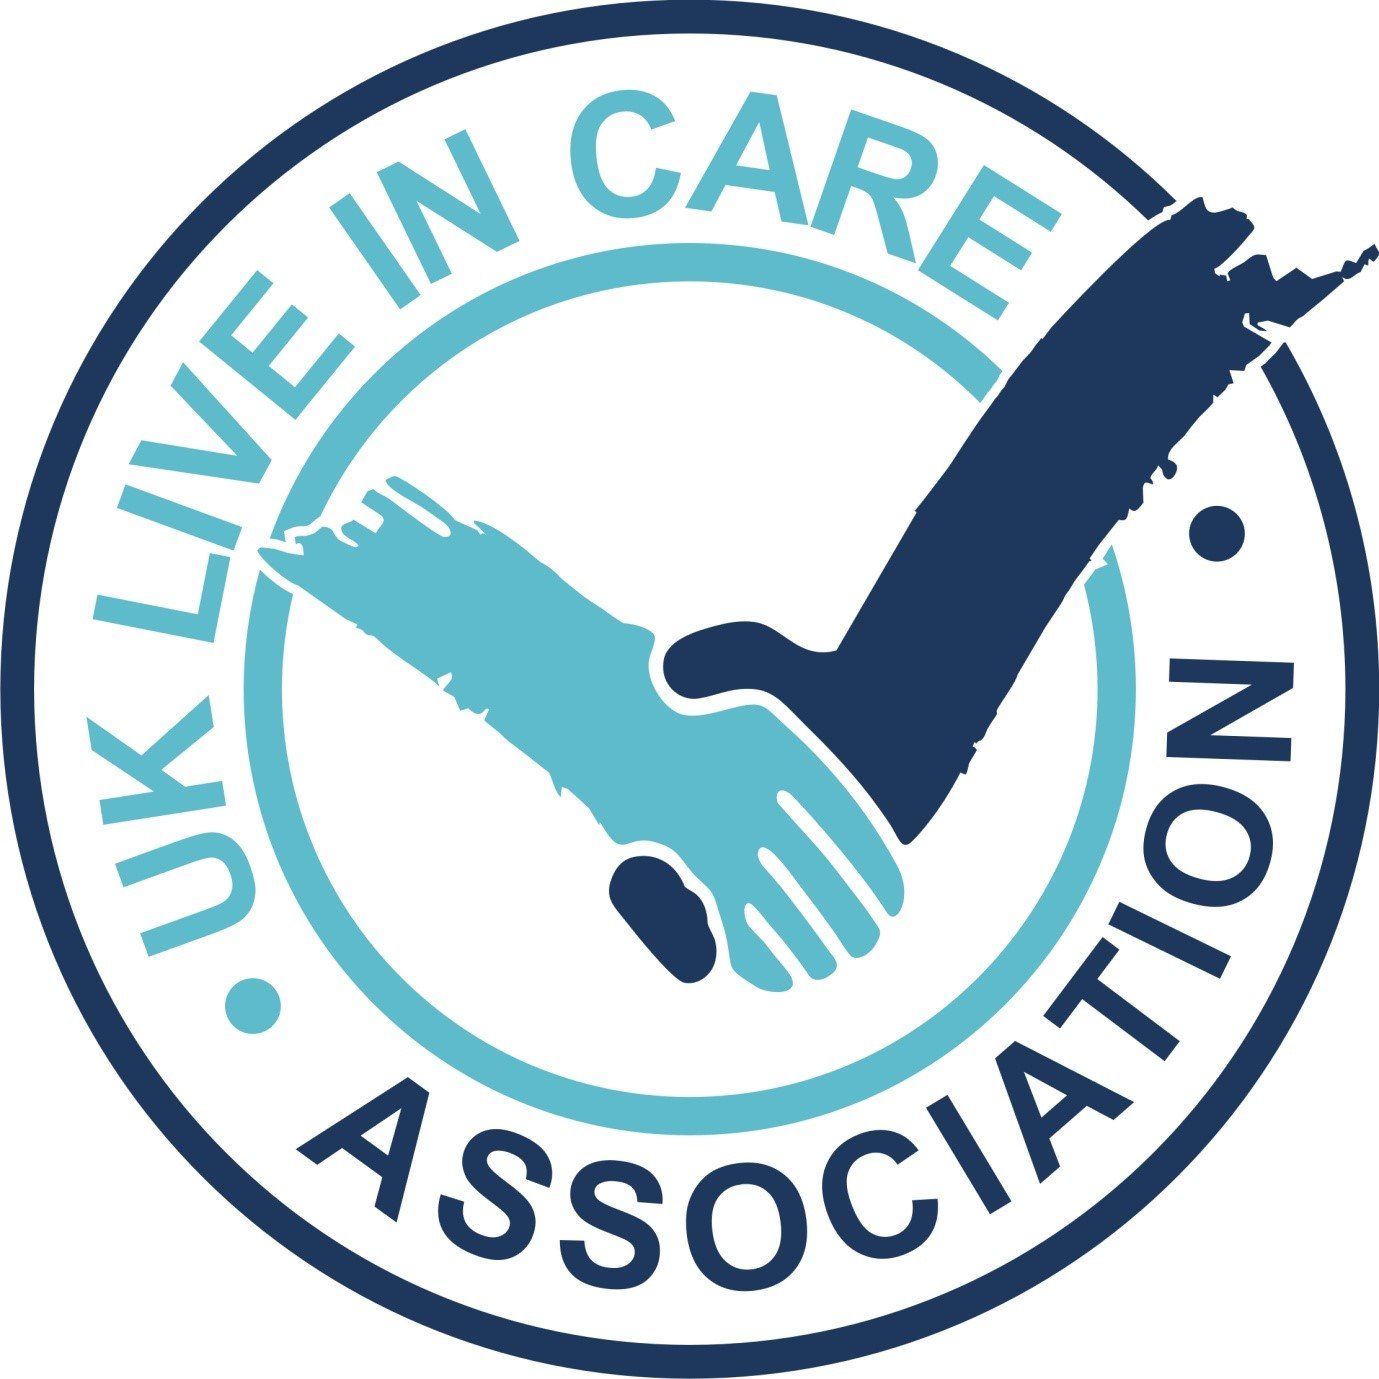 Uk live care association logo